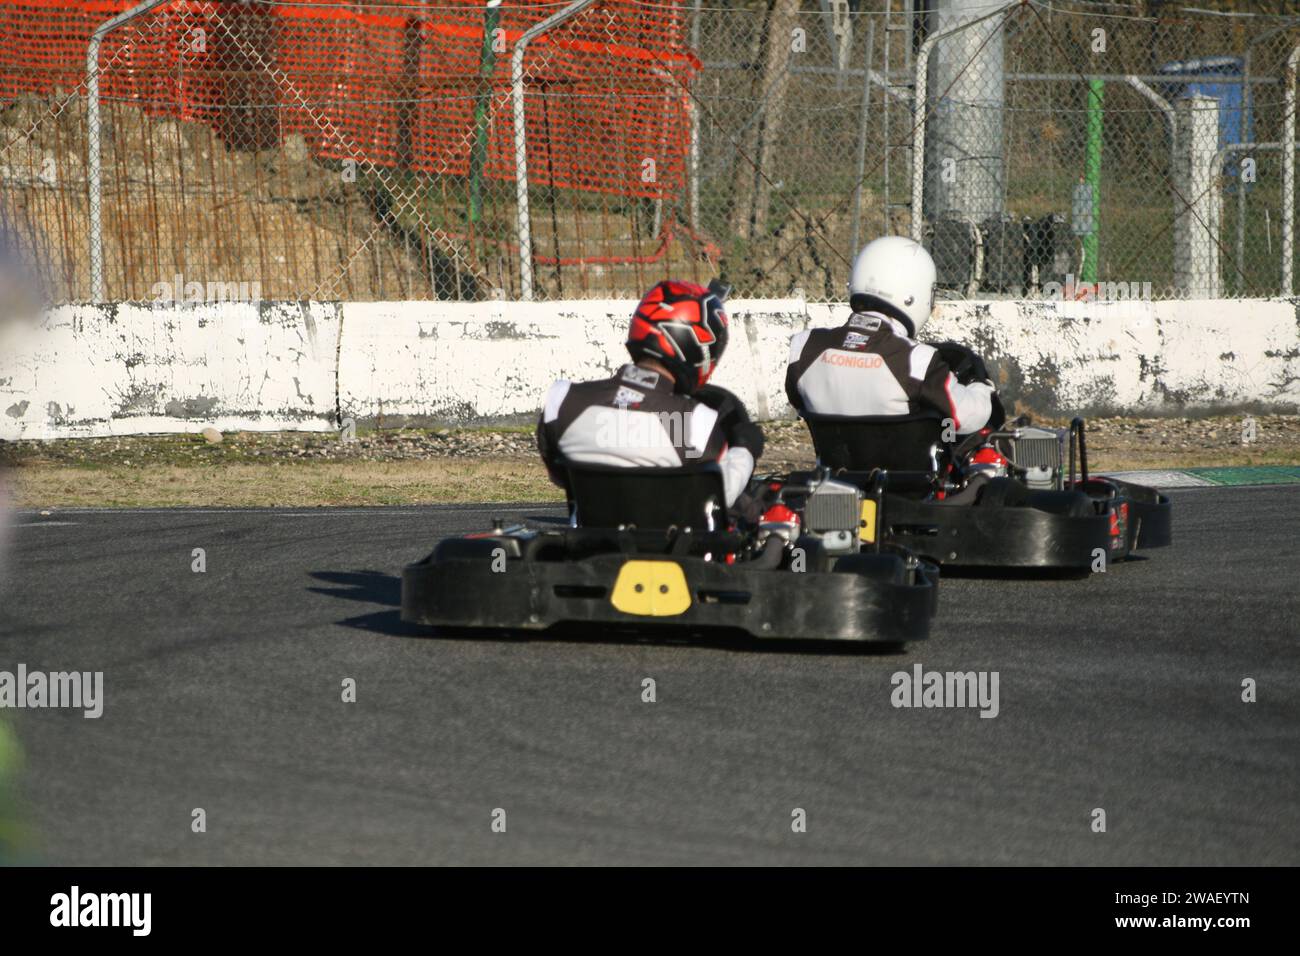 Photo taken at Circuito di Siena during a Karting Test. Stock Photo